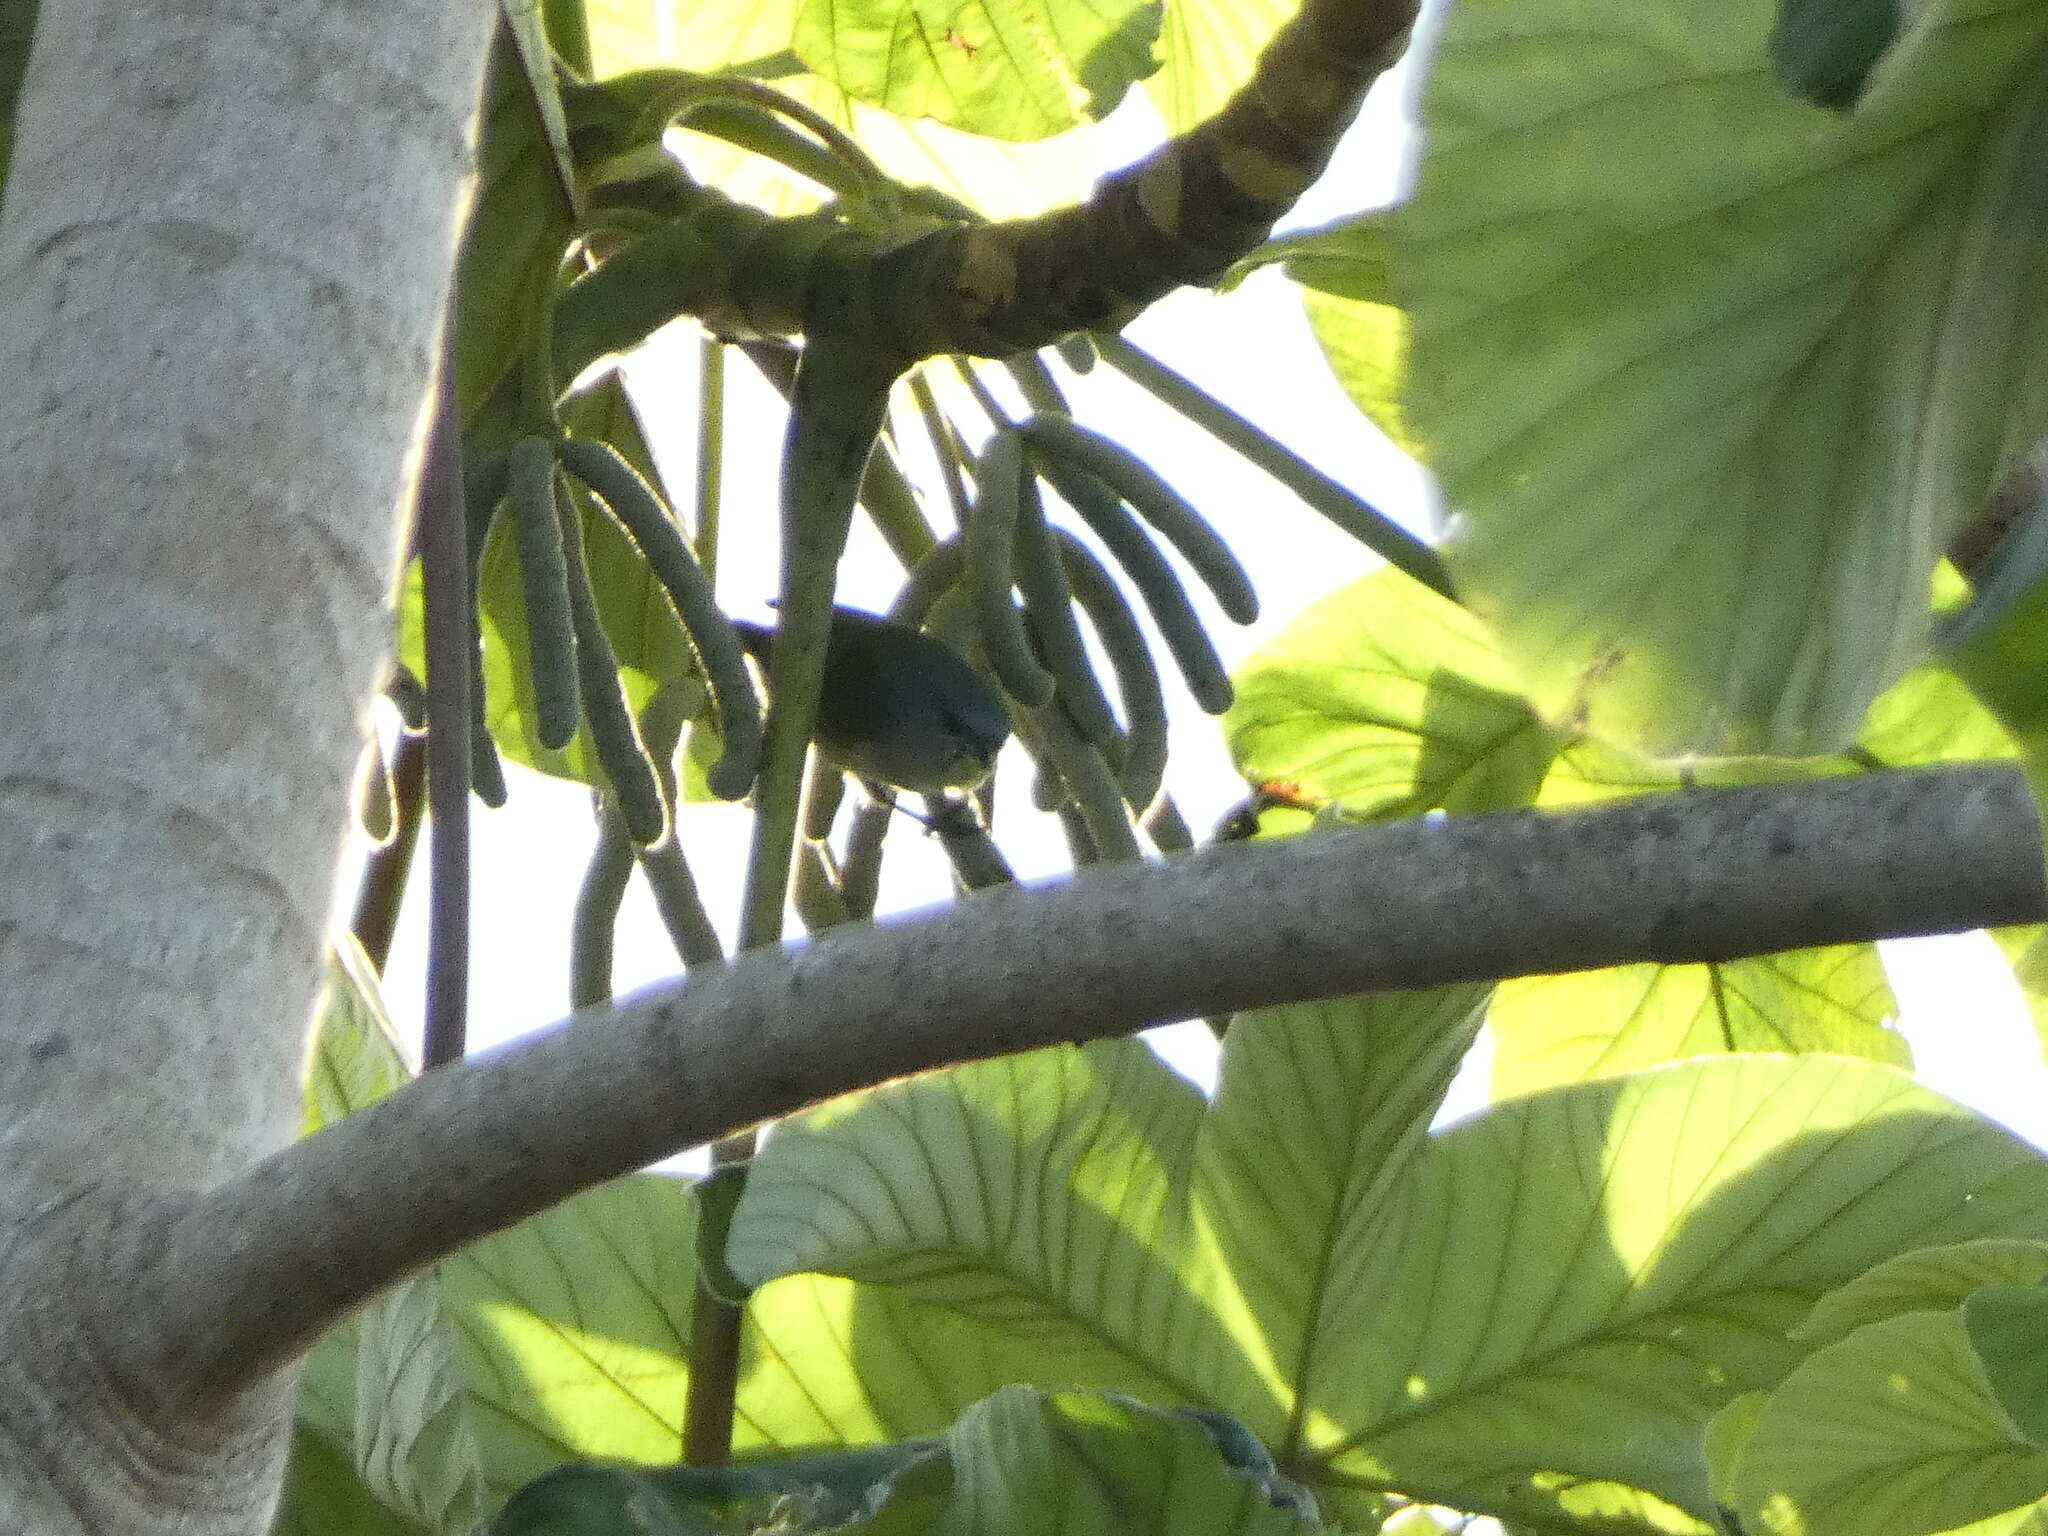 Image of Jamaican Euphonia